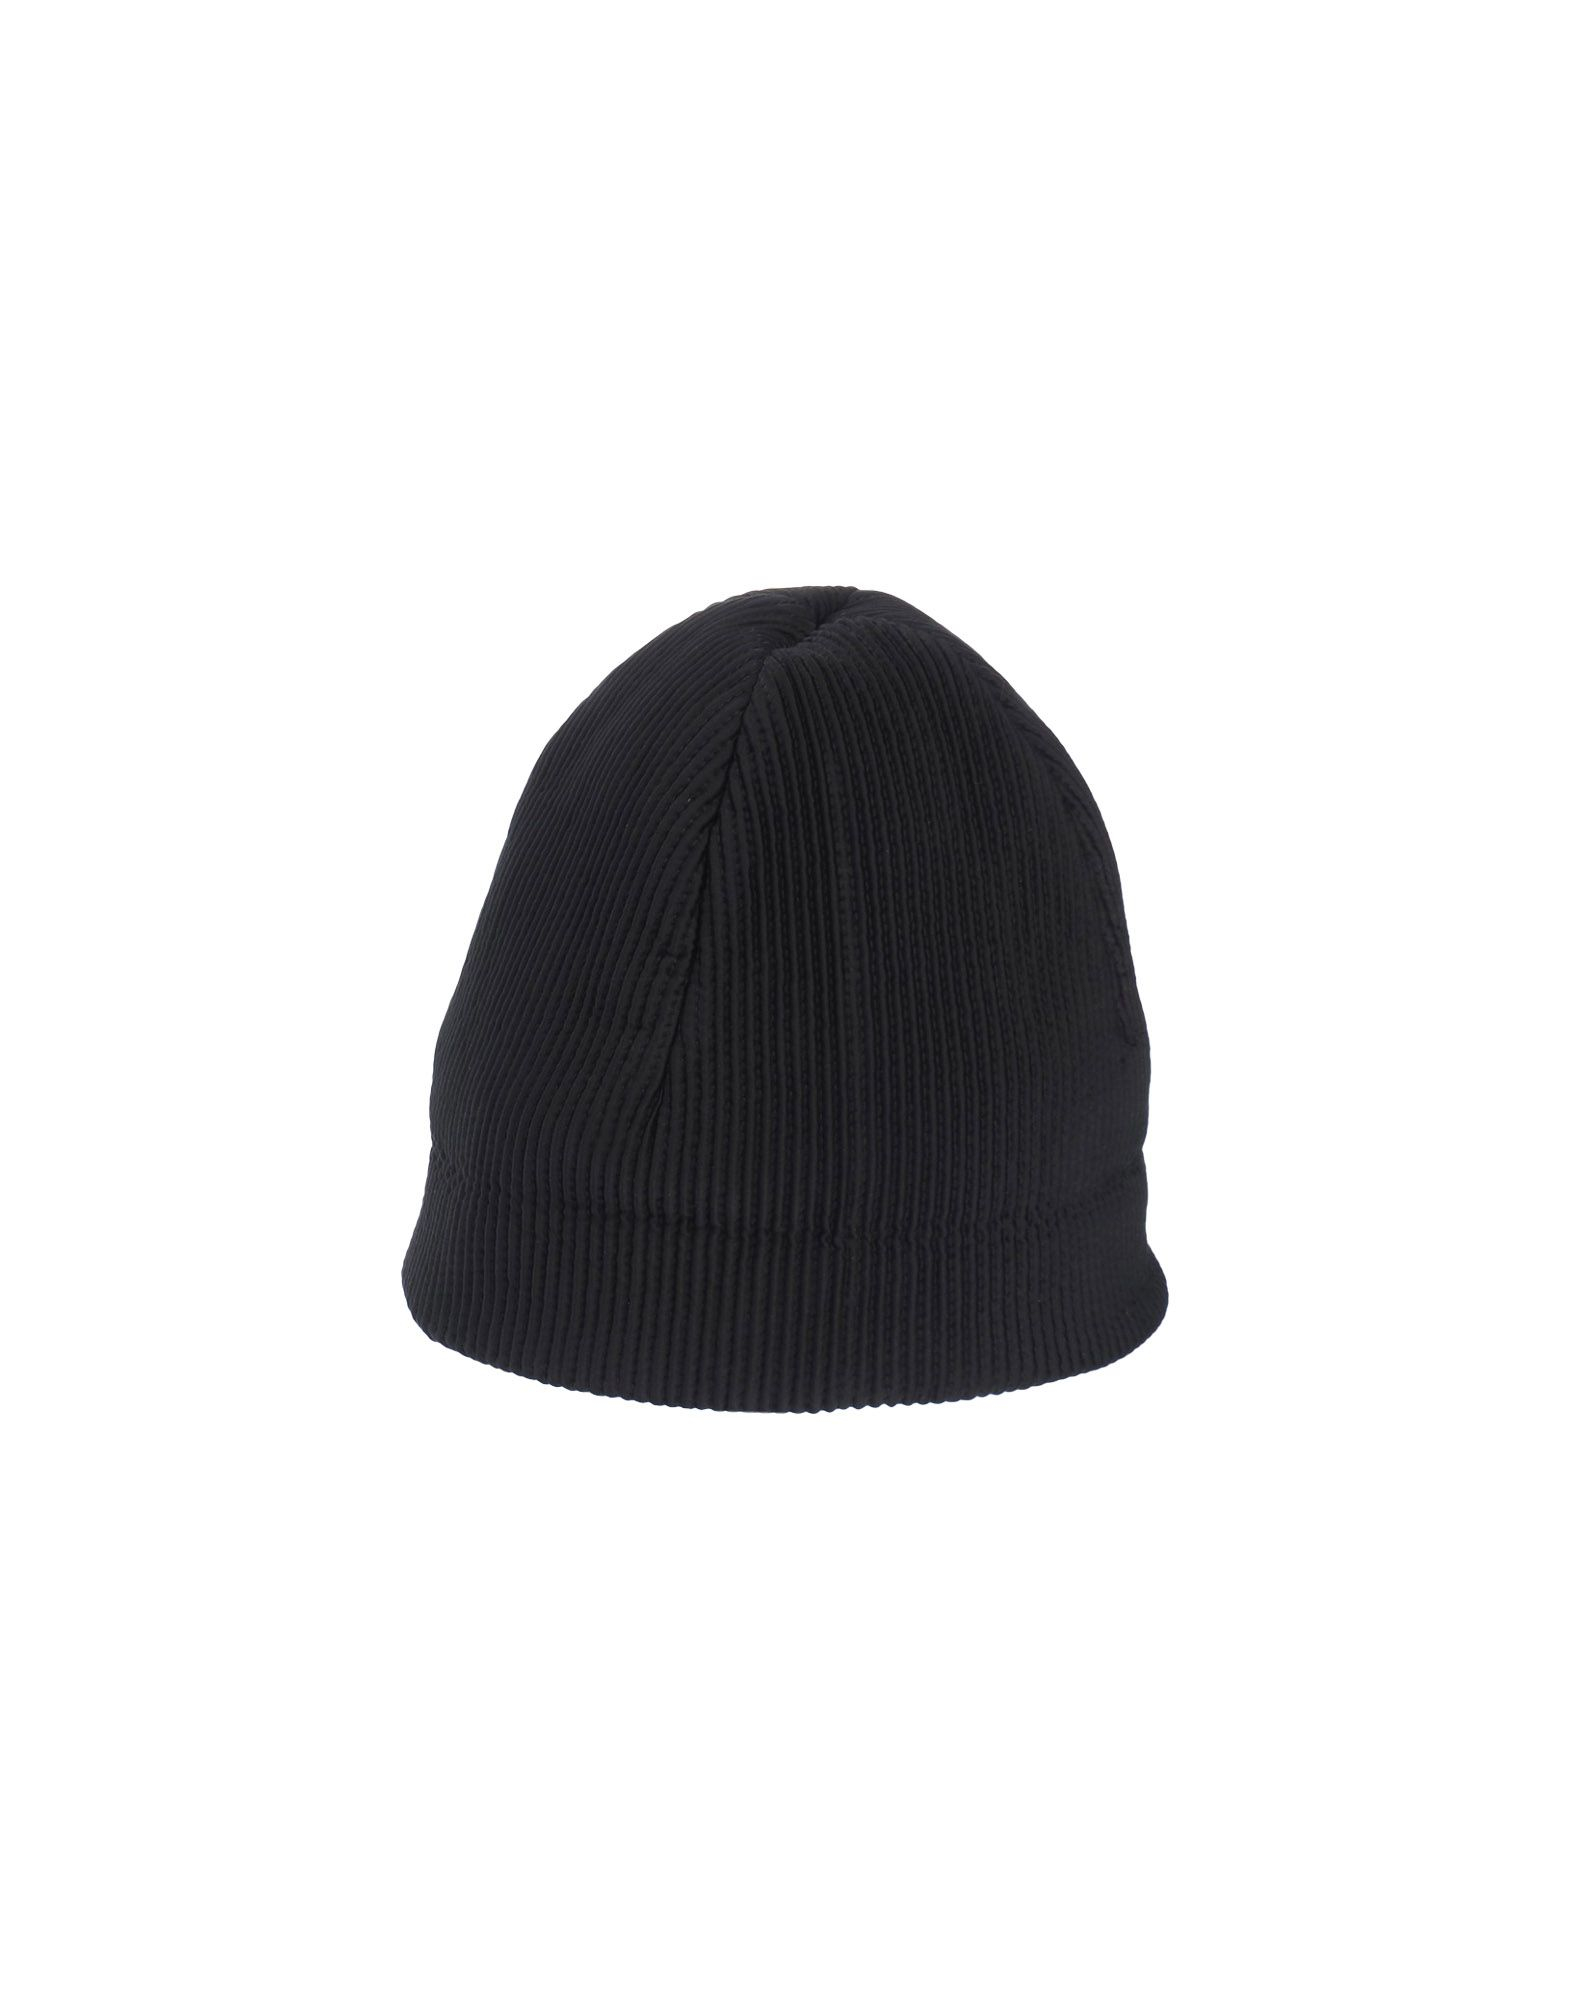 Lyst - Neil Barrett Hat in Black